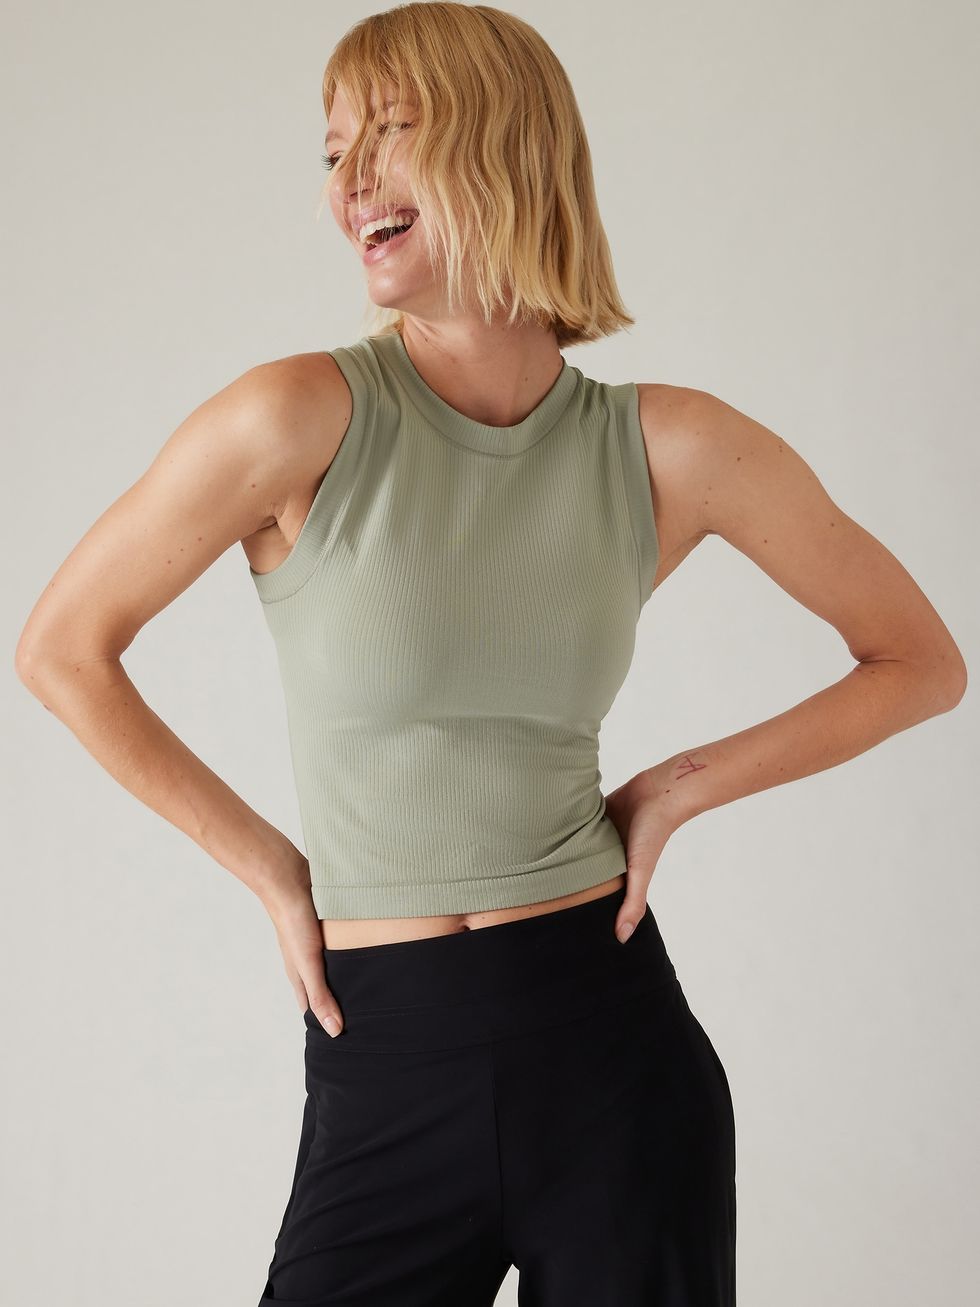 Everyday Yoga Women Tank Sleeveless Shirt Skin-Friendly Fabric